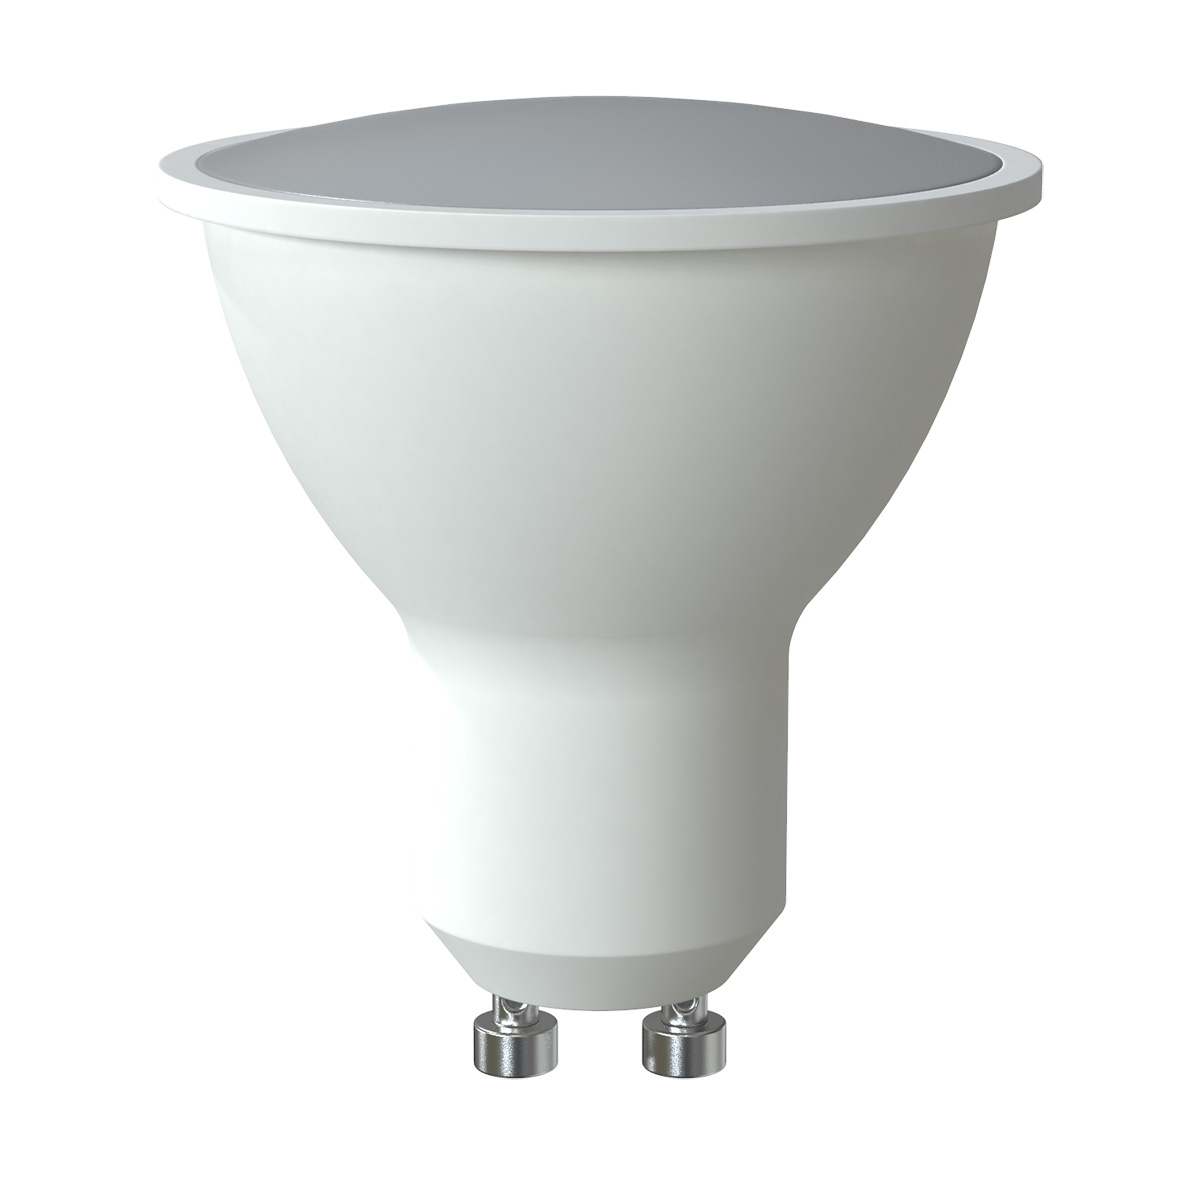 GU10 5W LED Spotlight - Cool White, Natural White or Warm White